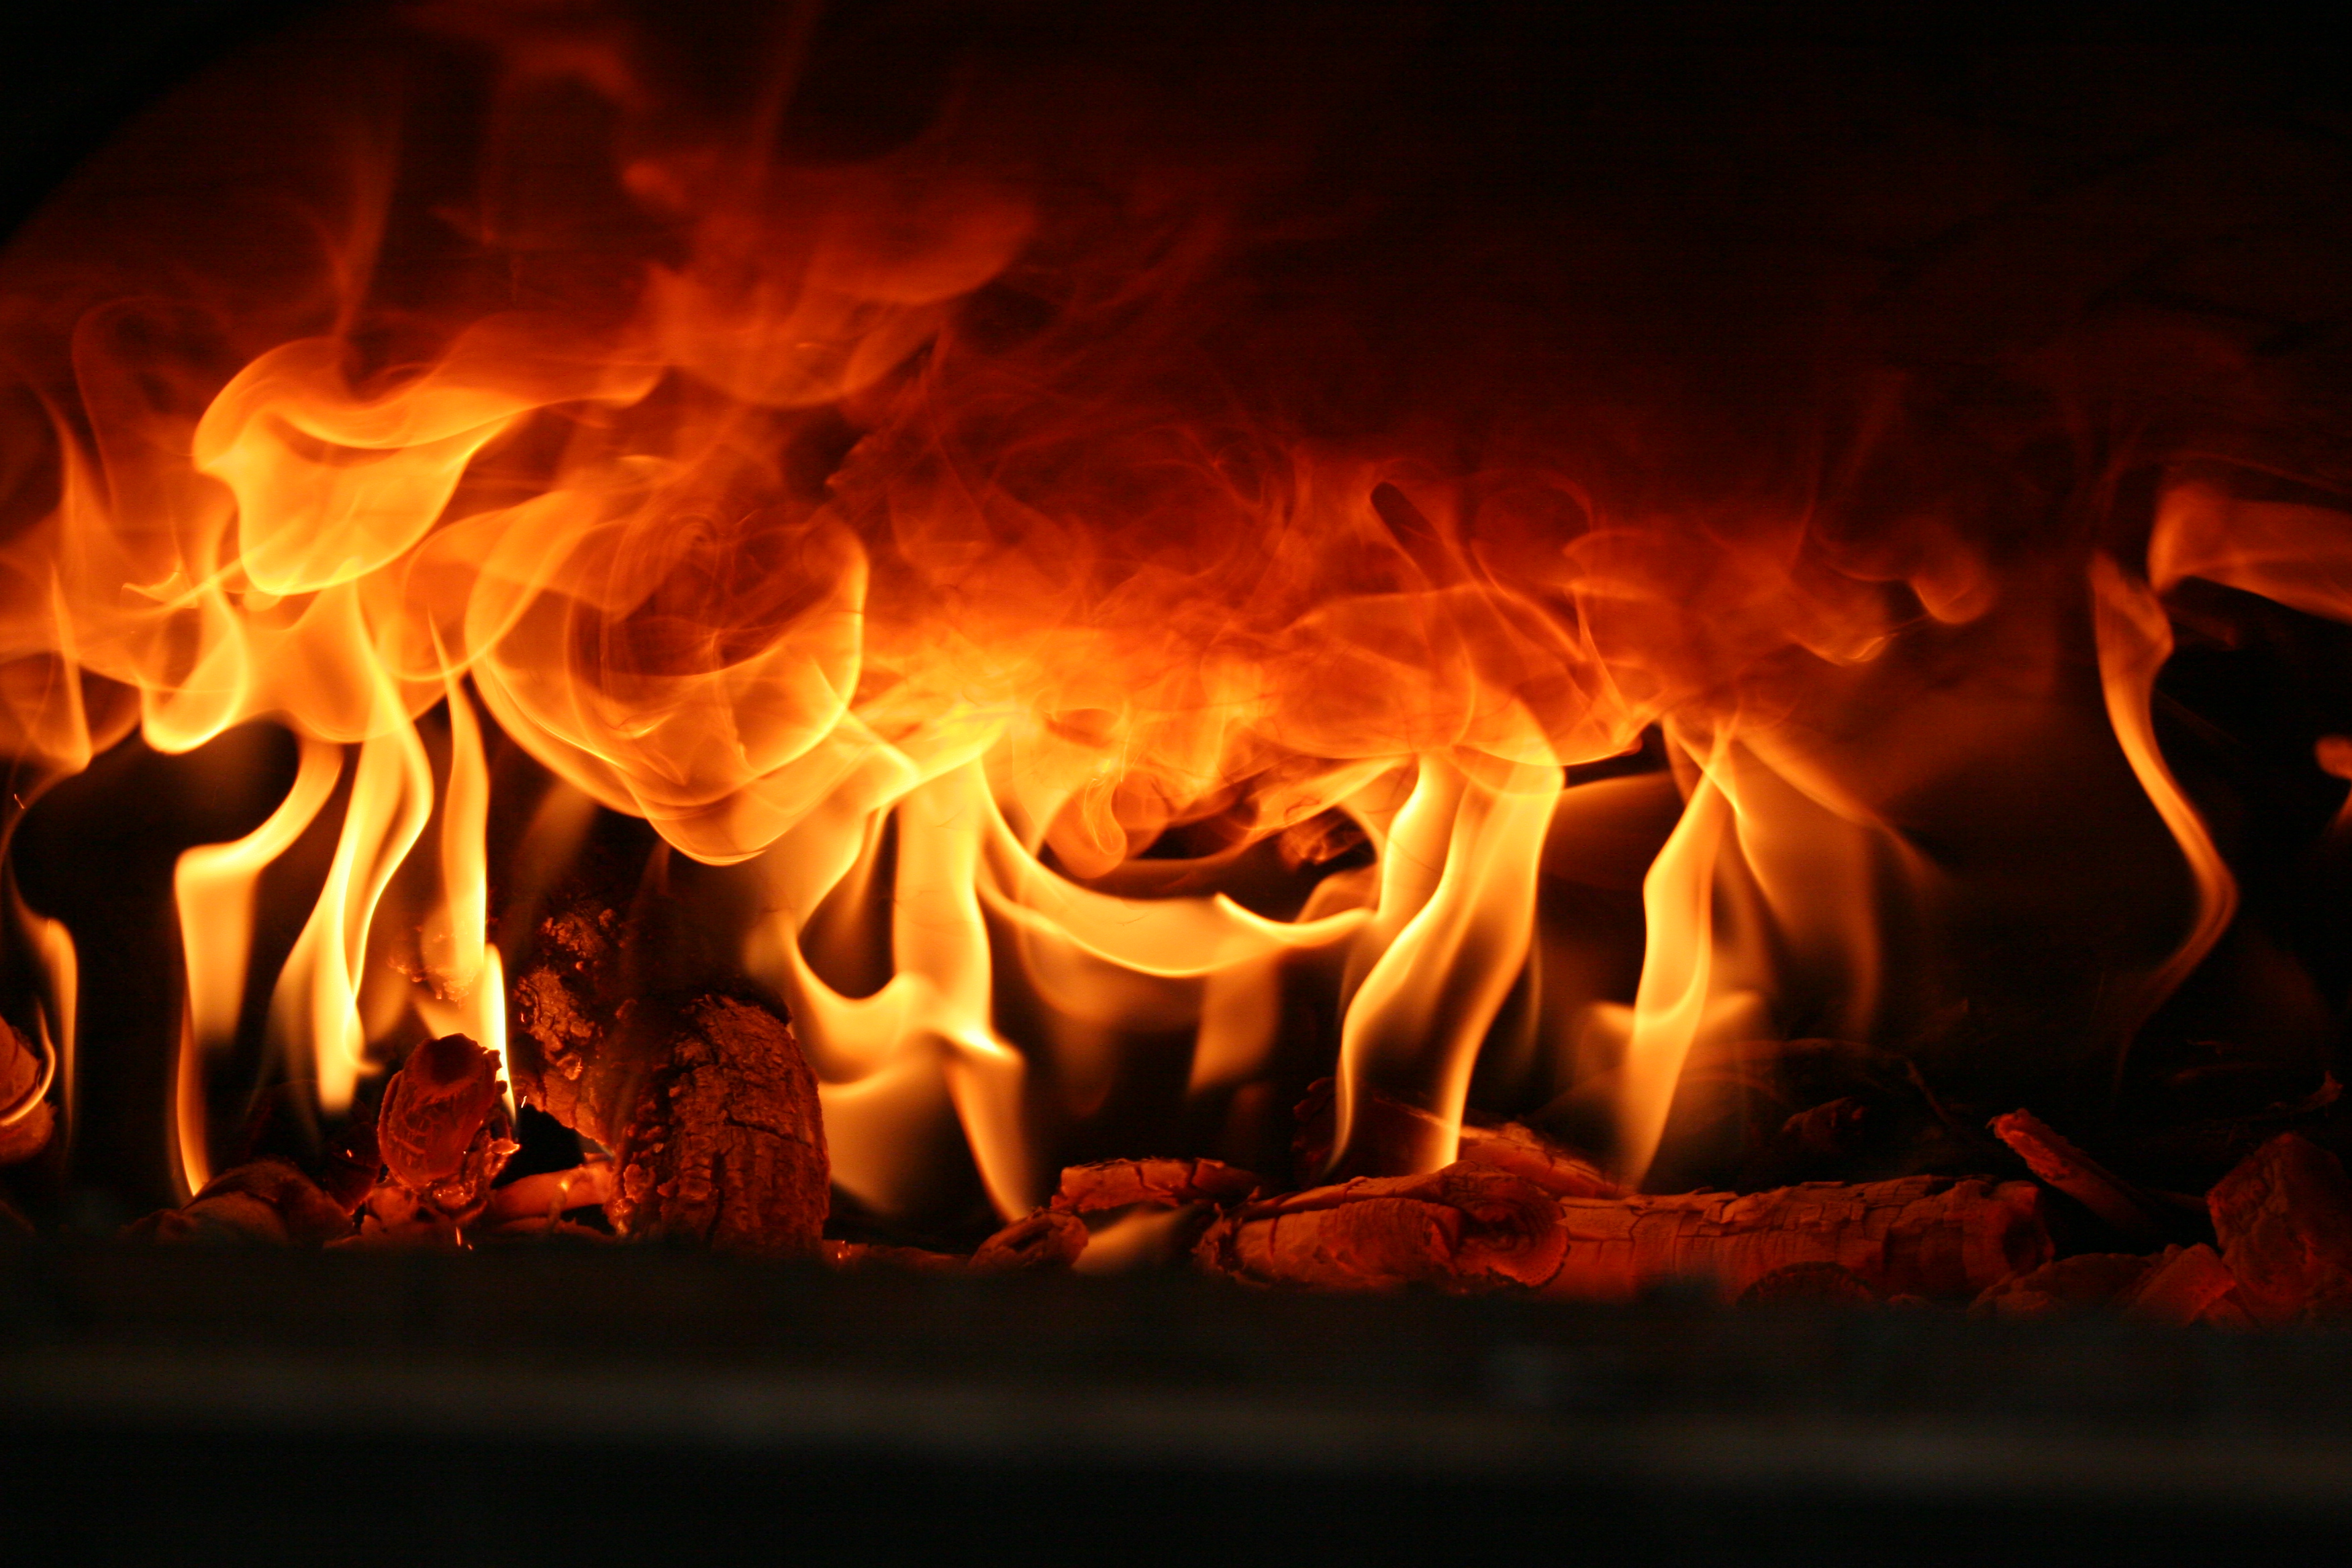 Fire by Flickr user Amy Glaze